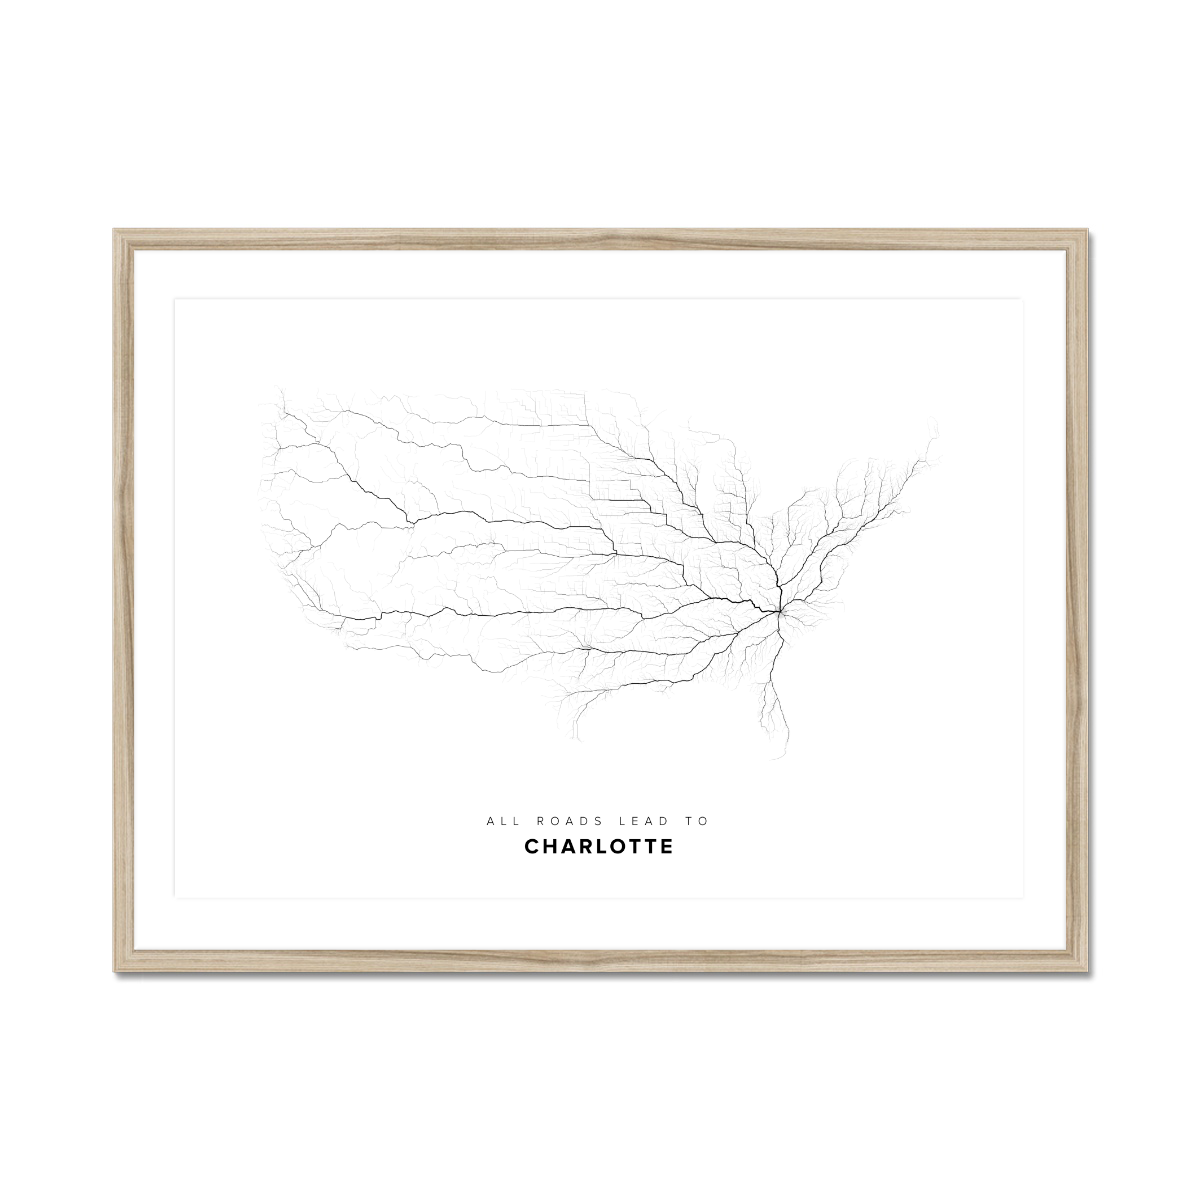 All roads lead to Charlotte (United States of America) Fine Art Map Print